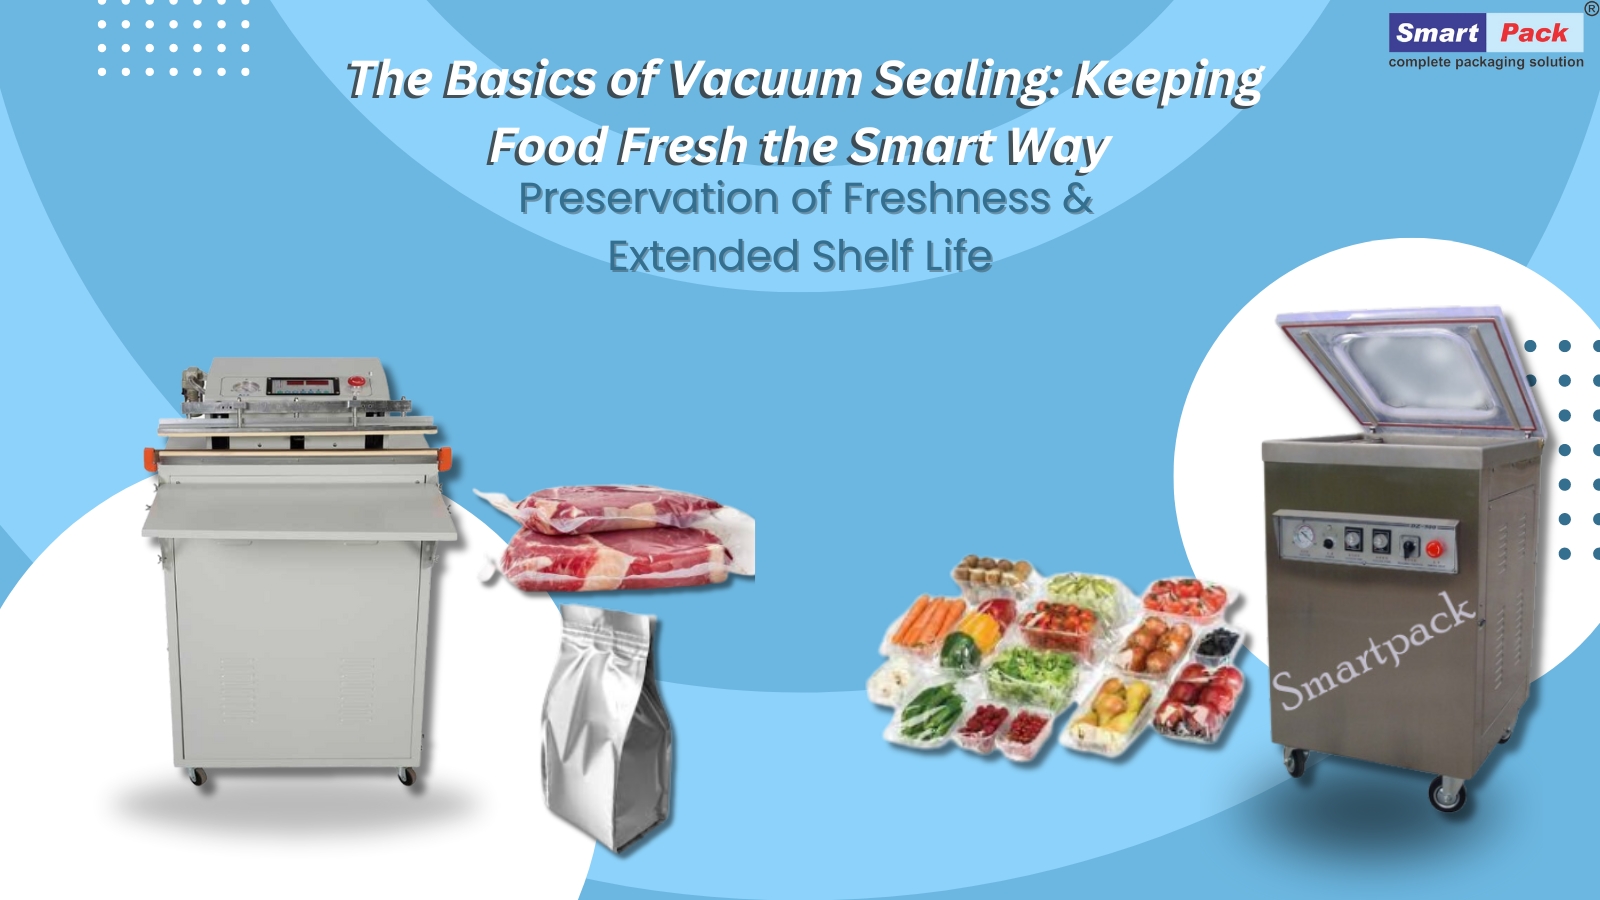 The Basics of Vacuum Sealing: Keeping Food Fresh the Smart Way